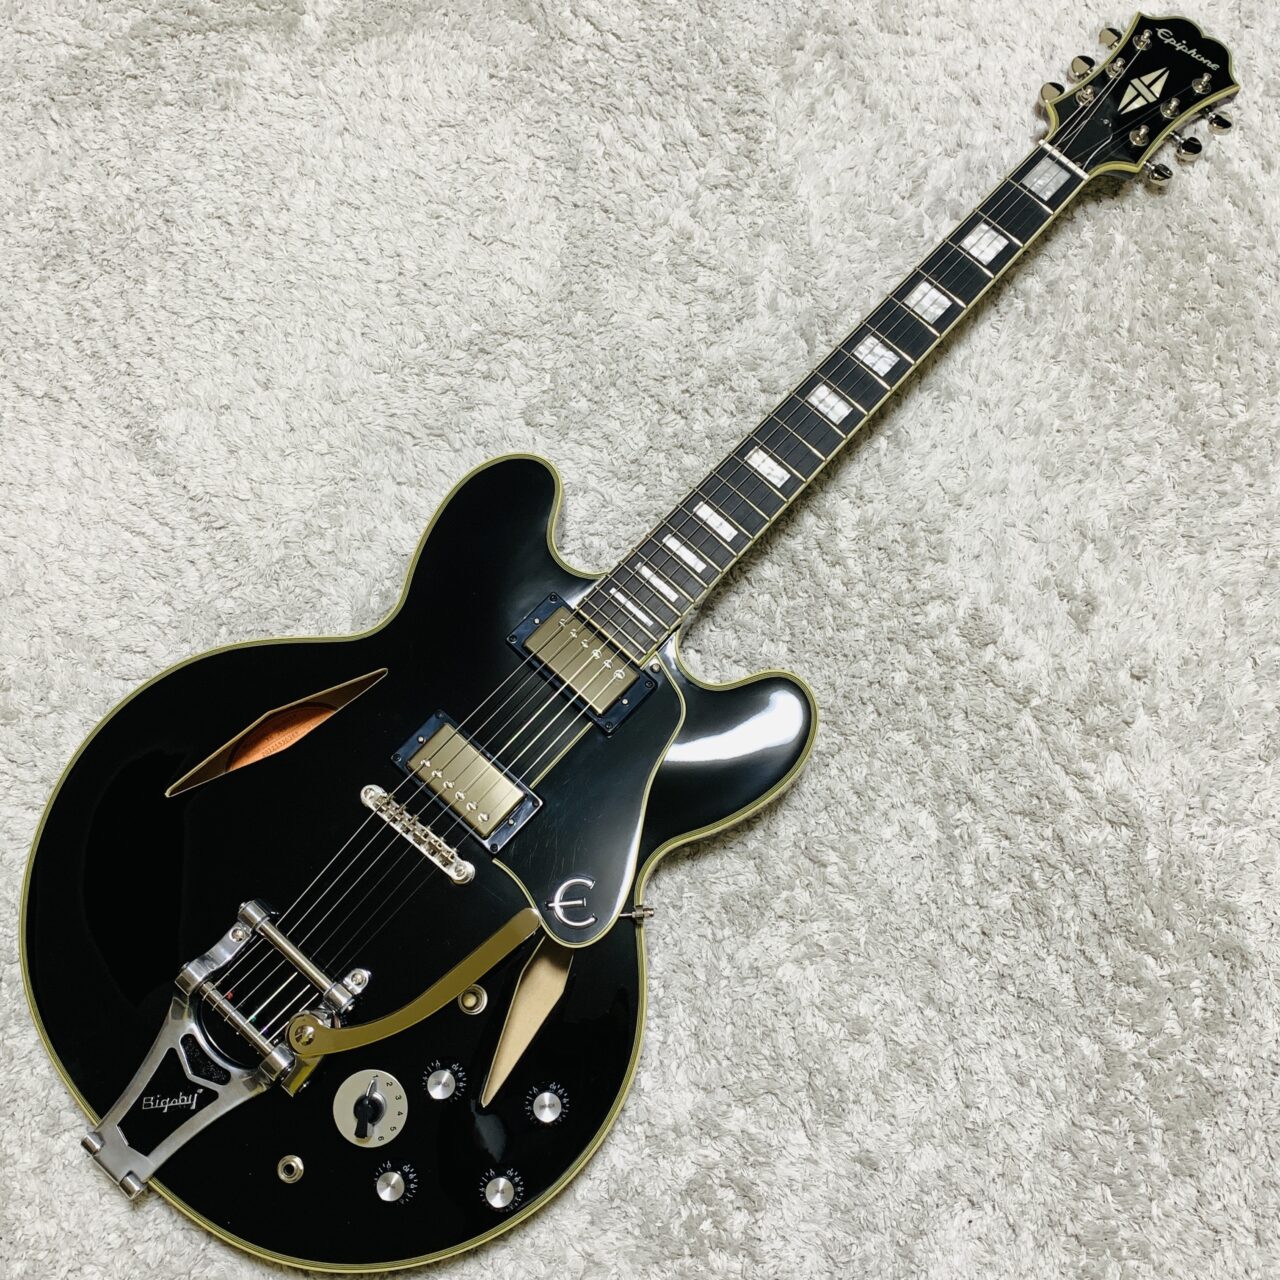 Gibson Shinichi Ubukata ES-355 生形 レスポール www.krzysztofbialy.com